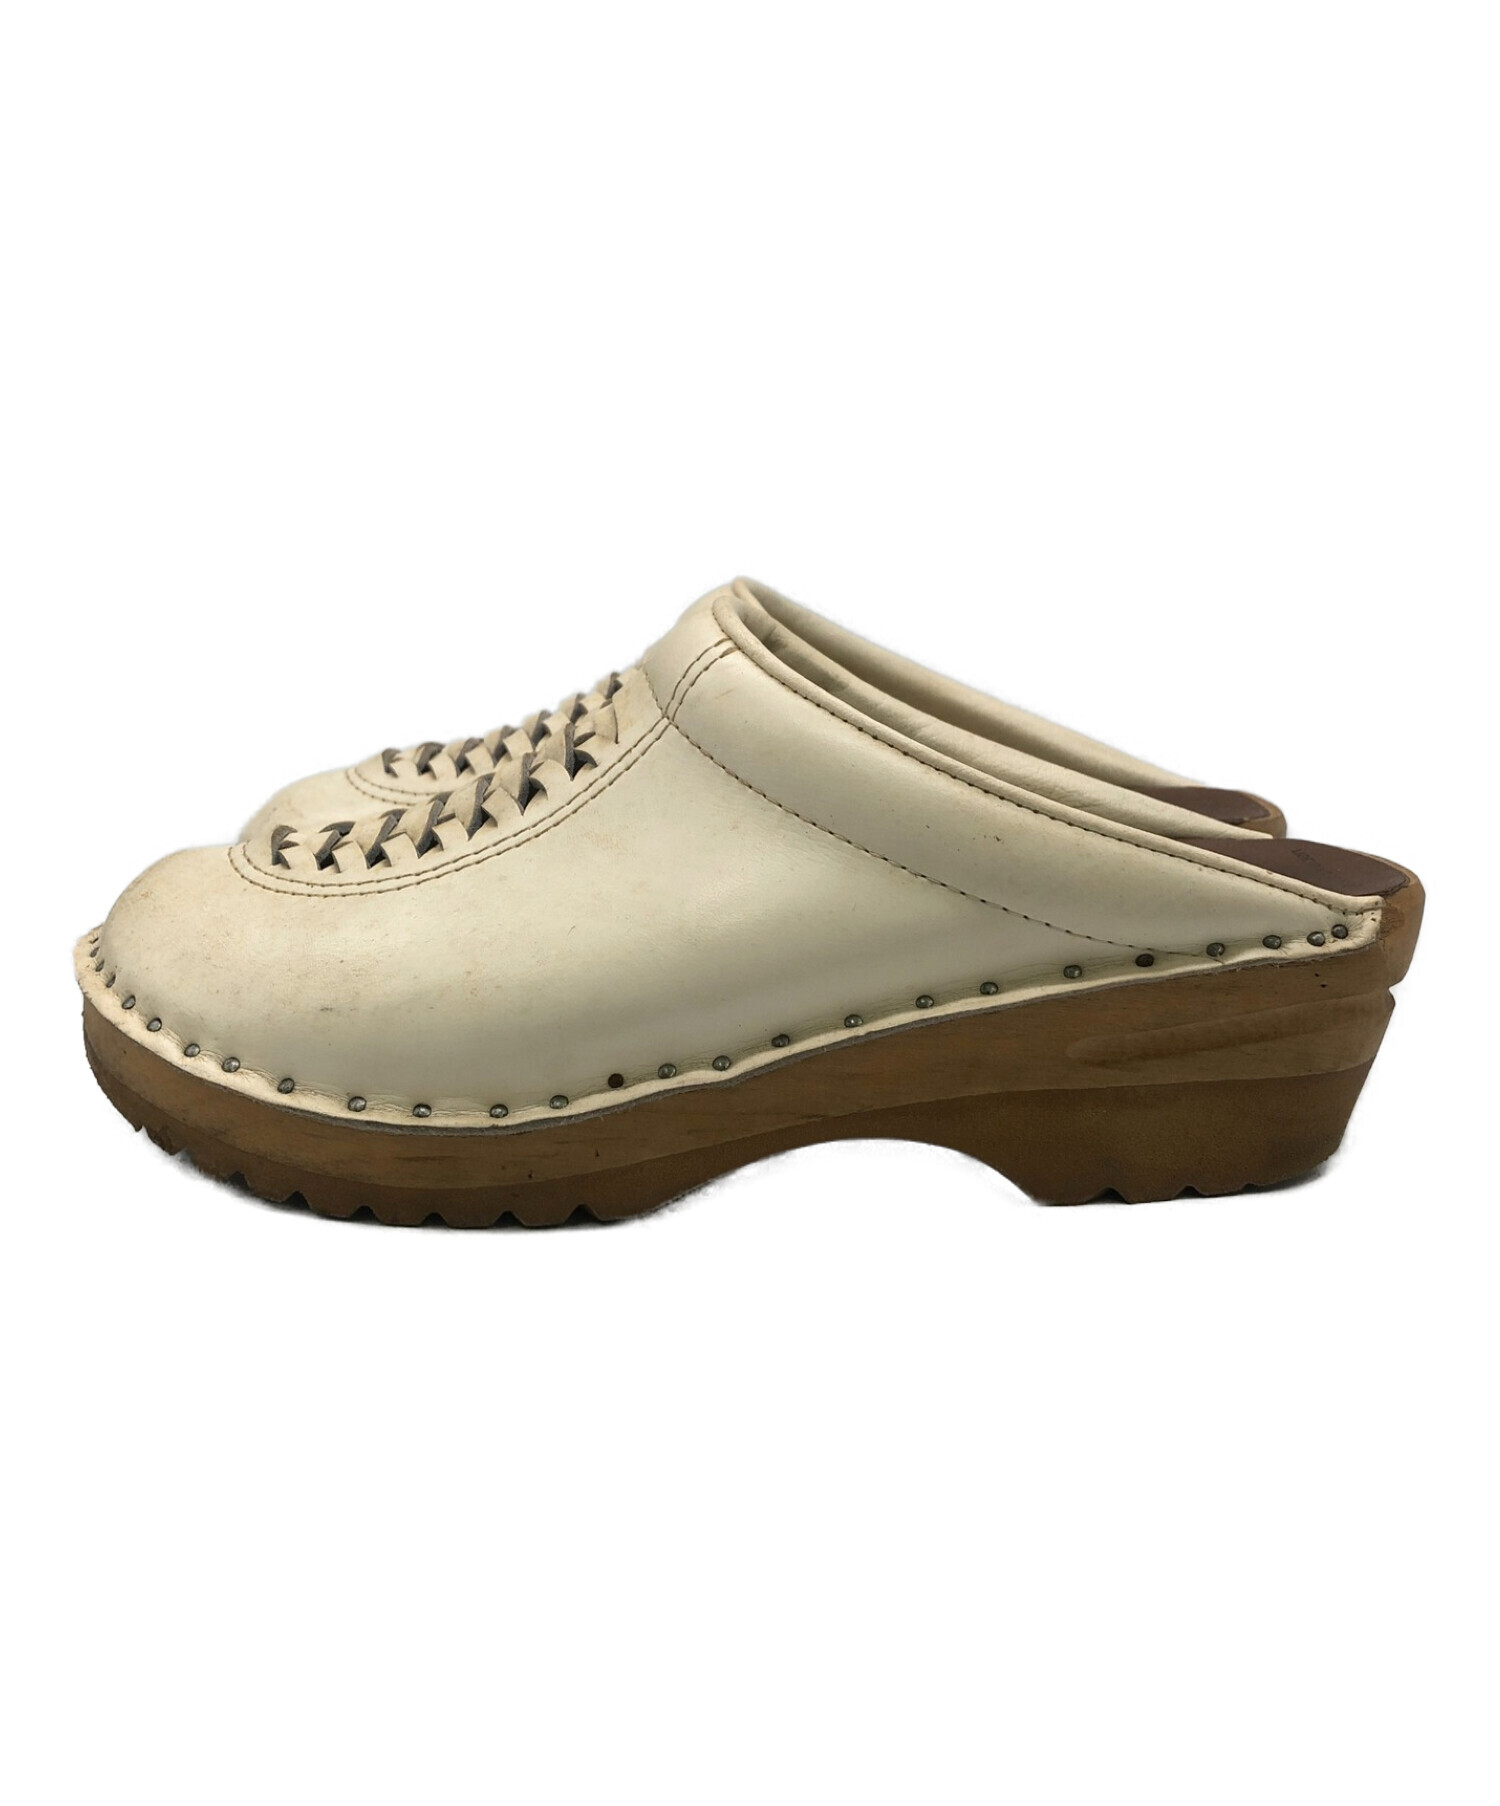 troentorp トロエントープ サボ size41(26.5相当) - 靴